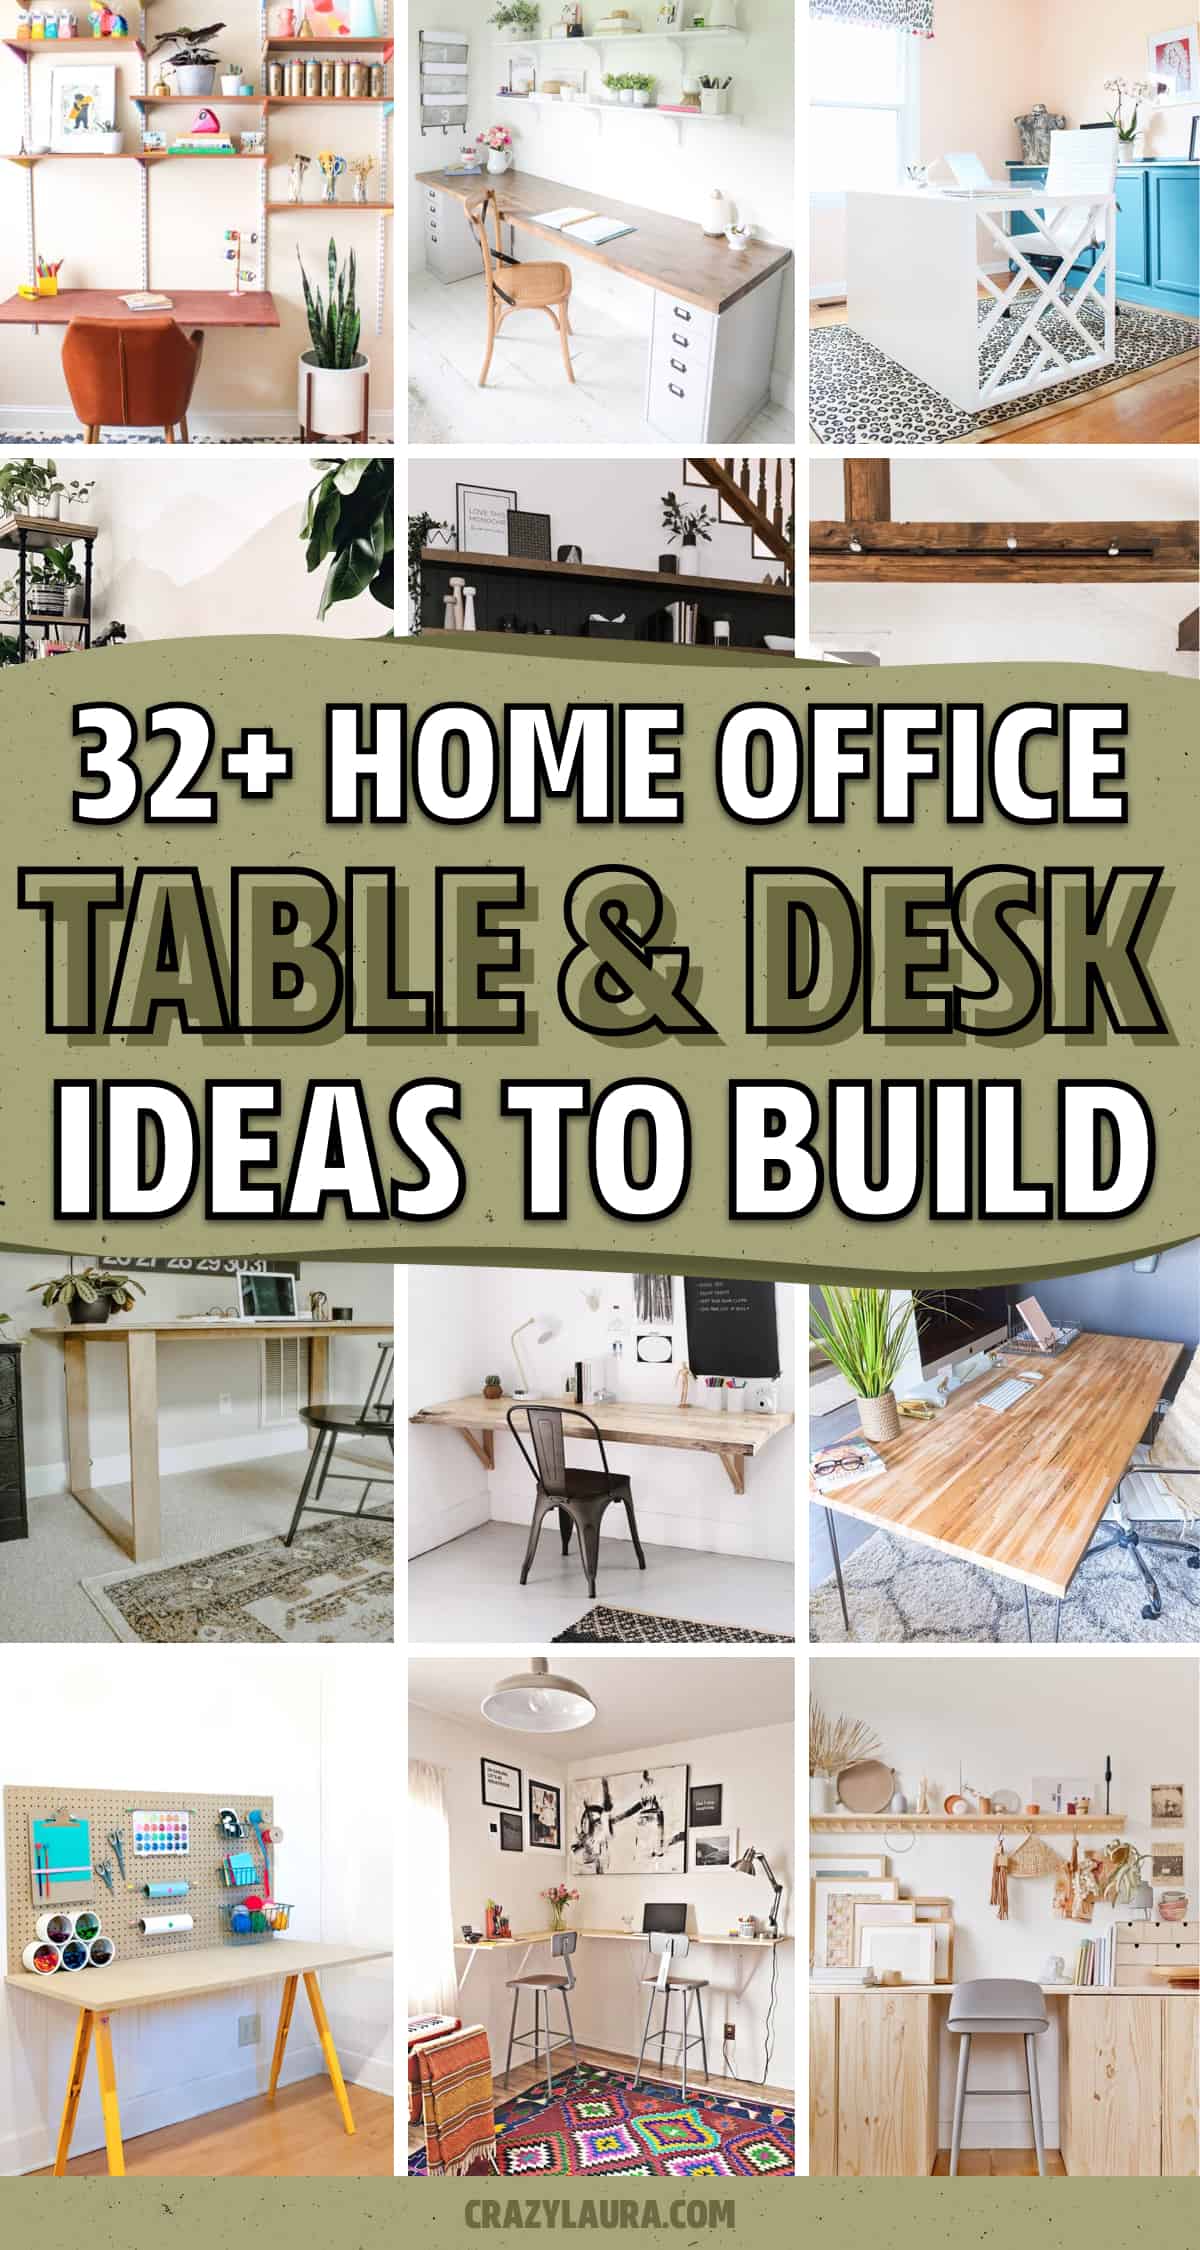 diy table ideas for home office